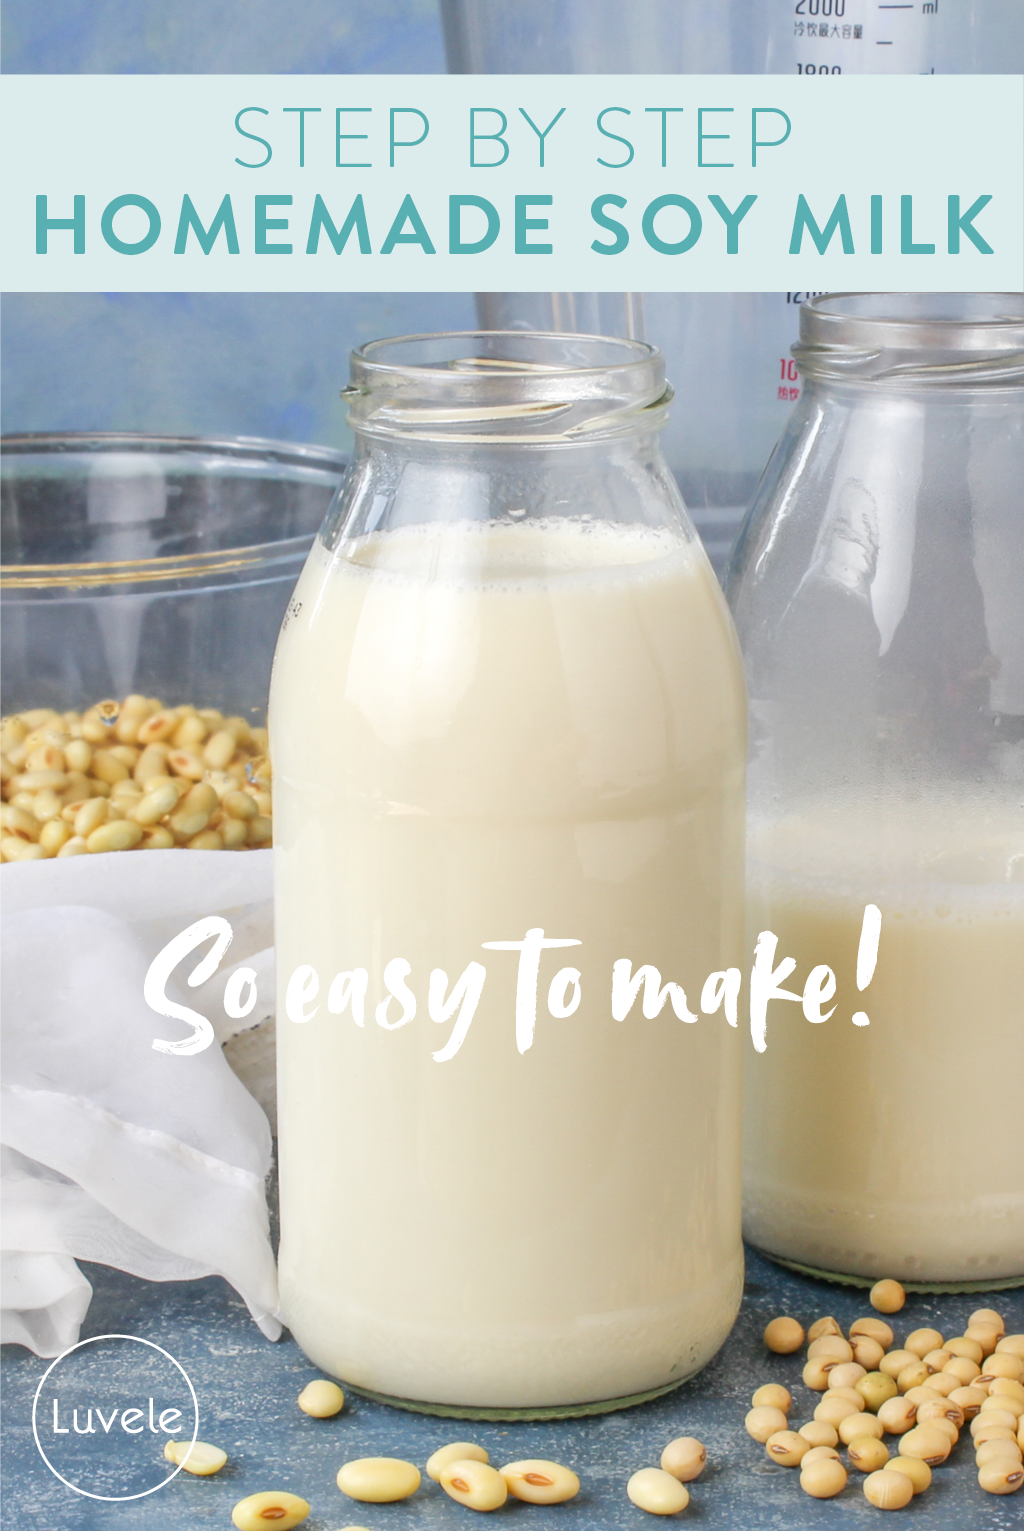 Step by Step homemade soy milk - Luvele US